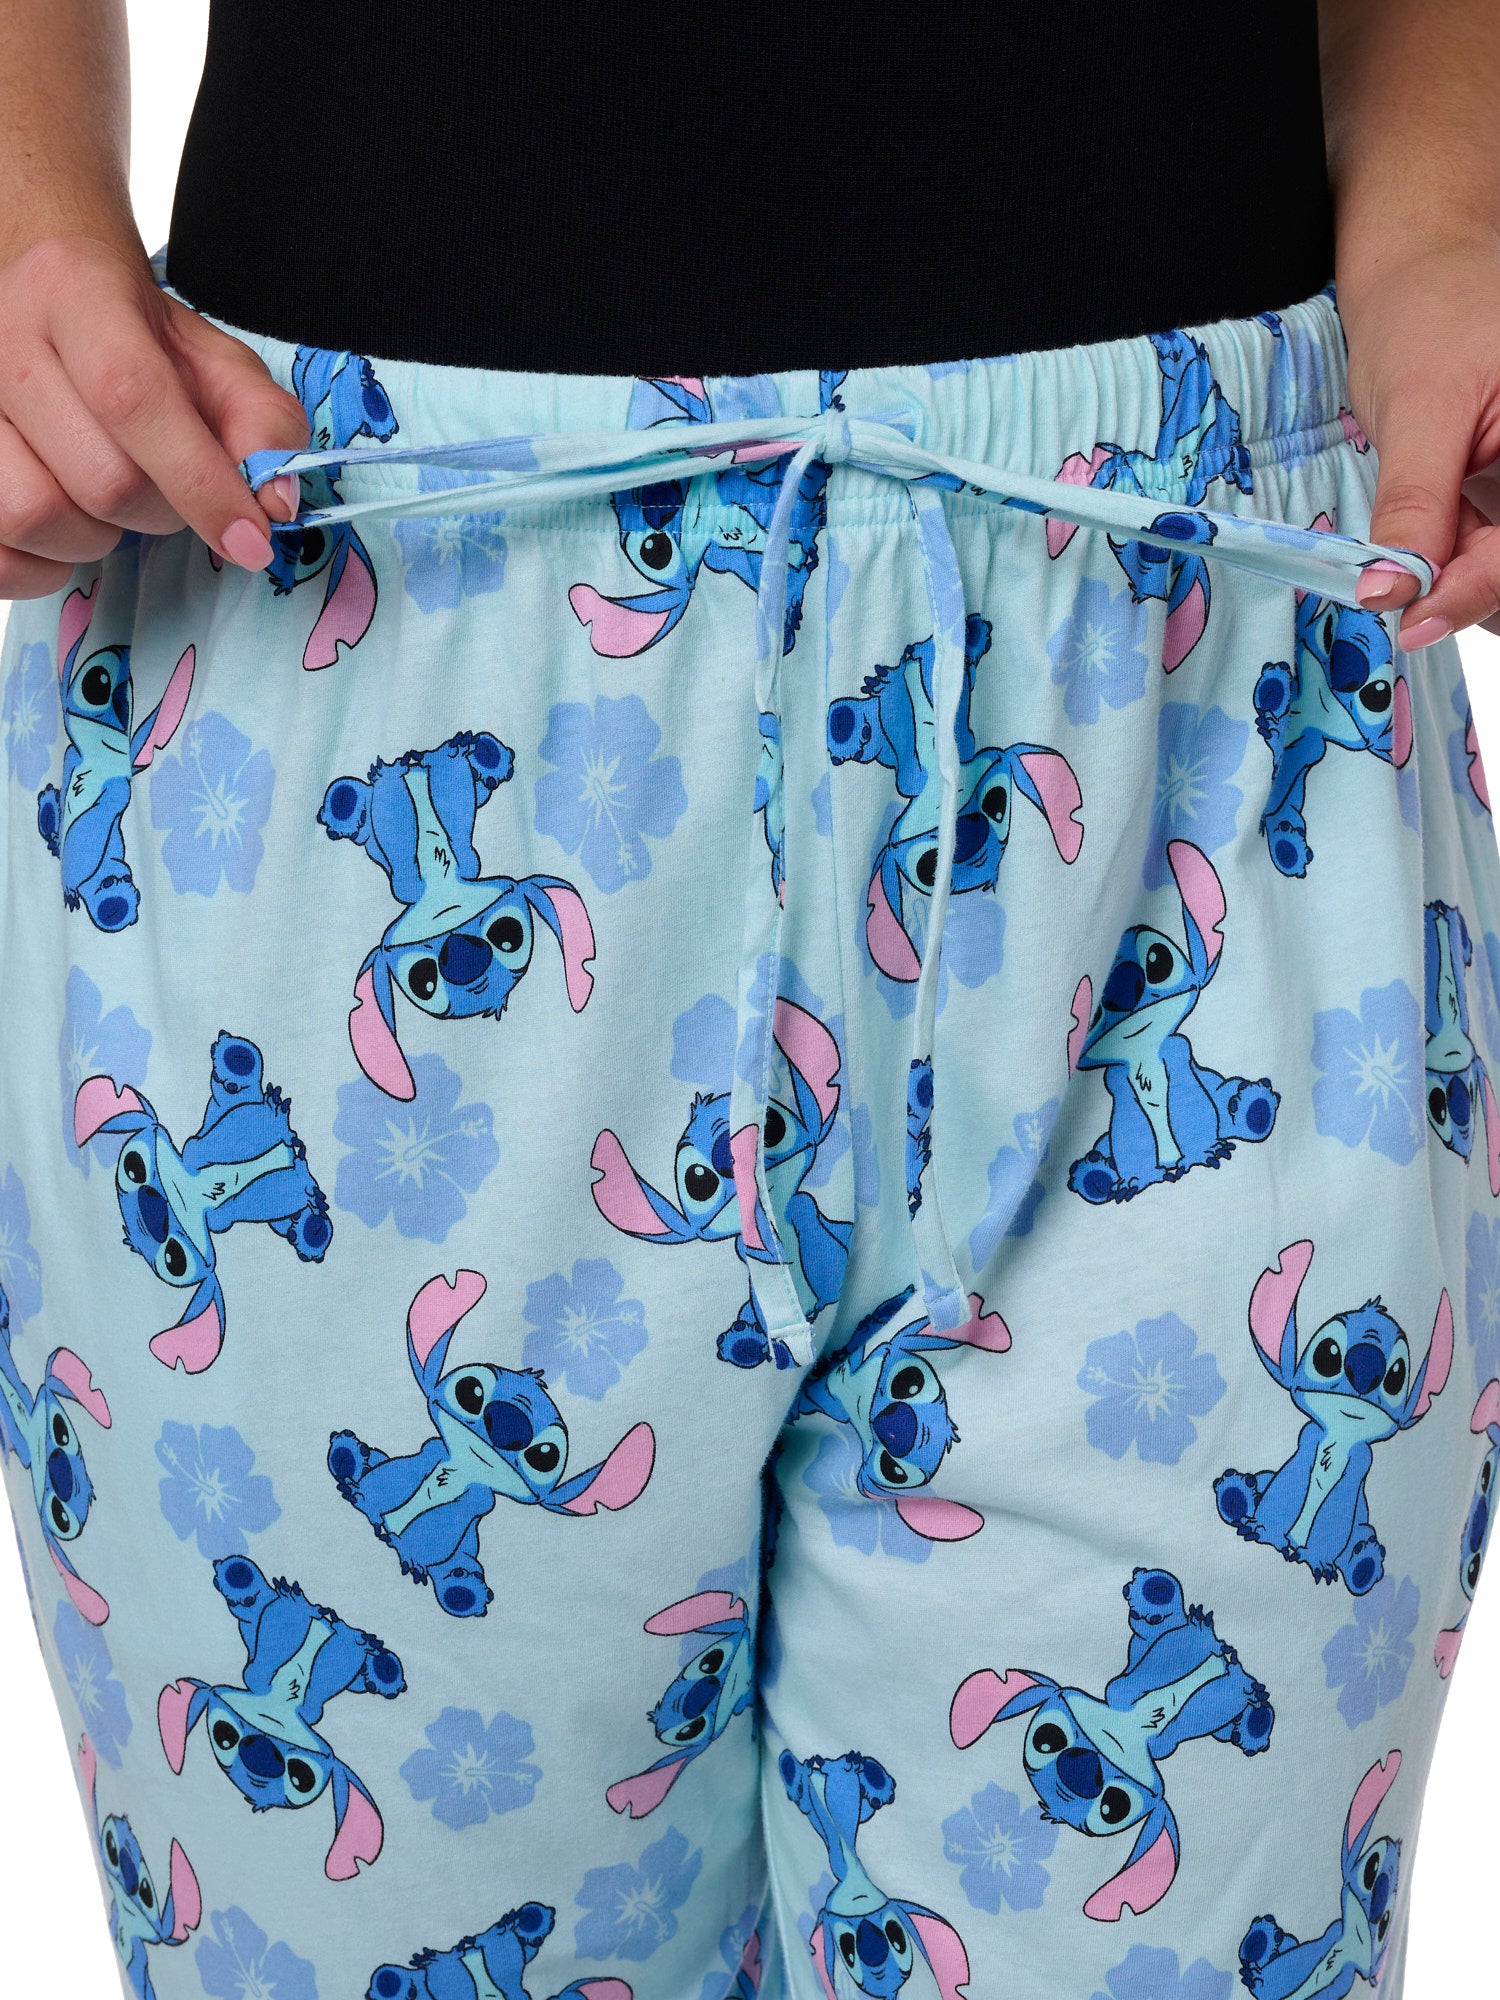 Disney Stitch Pajama Pants Loungewear Hibiscus Floral Womens Plus Size Cotton